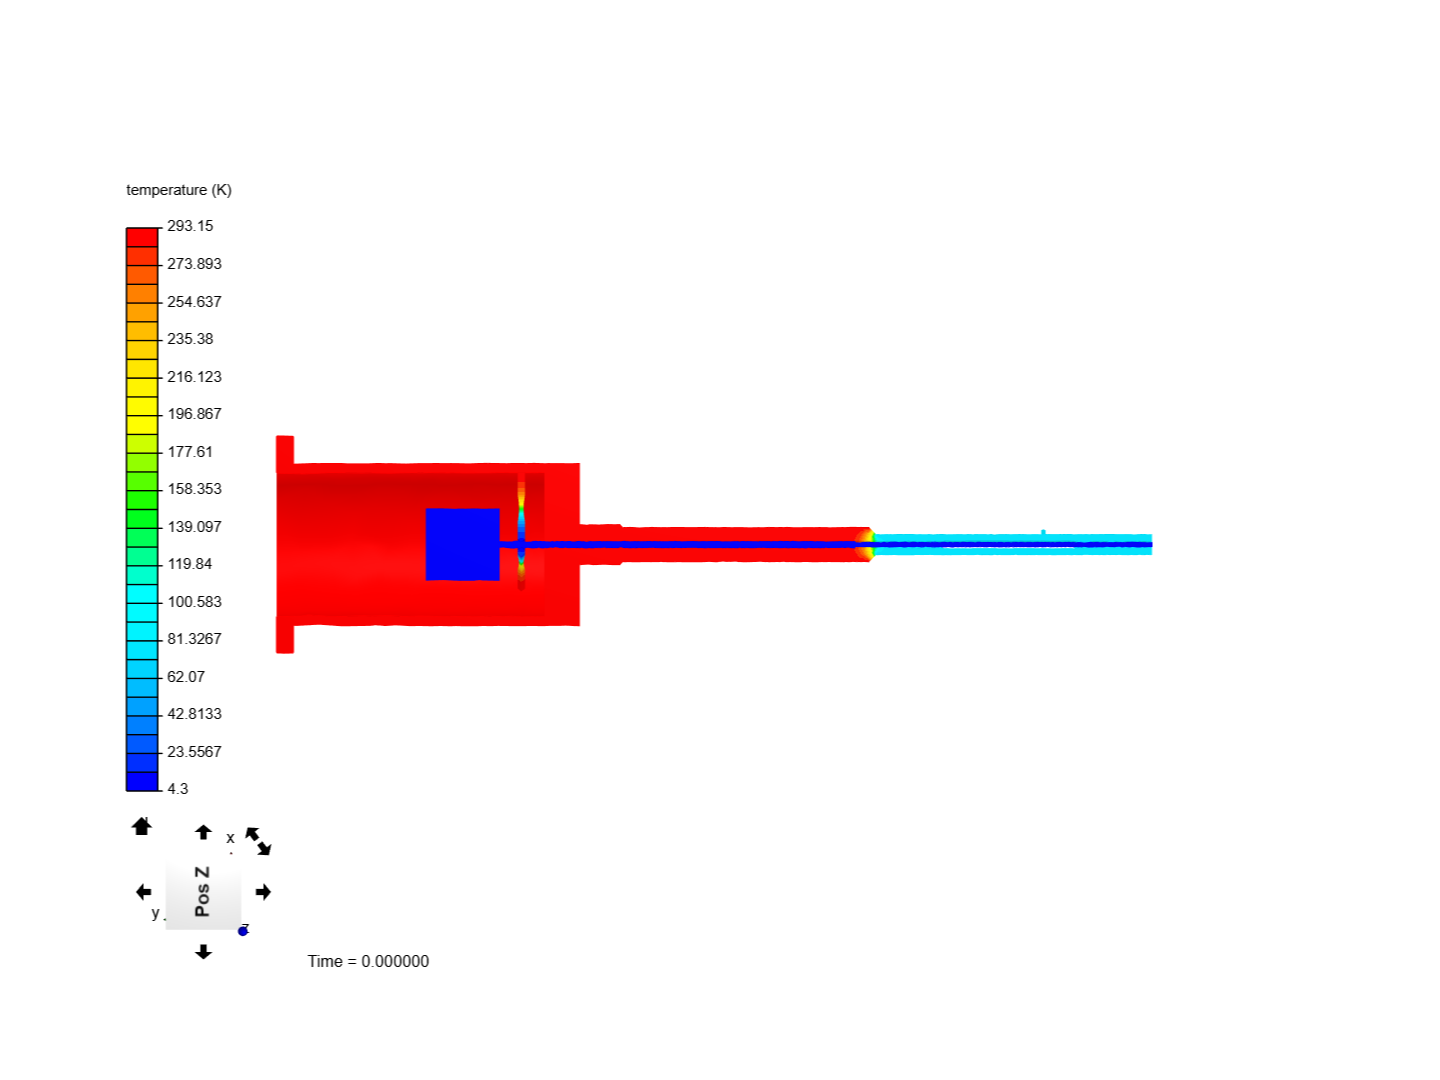 Specimen Holder - Thermal Analysis image